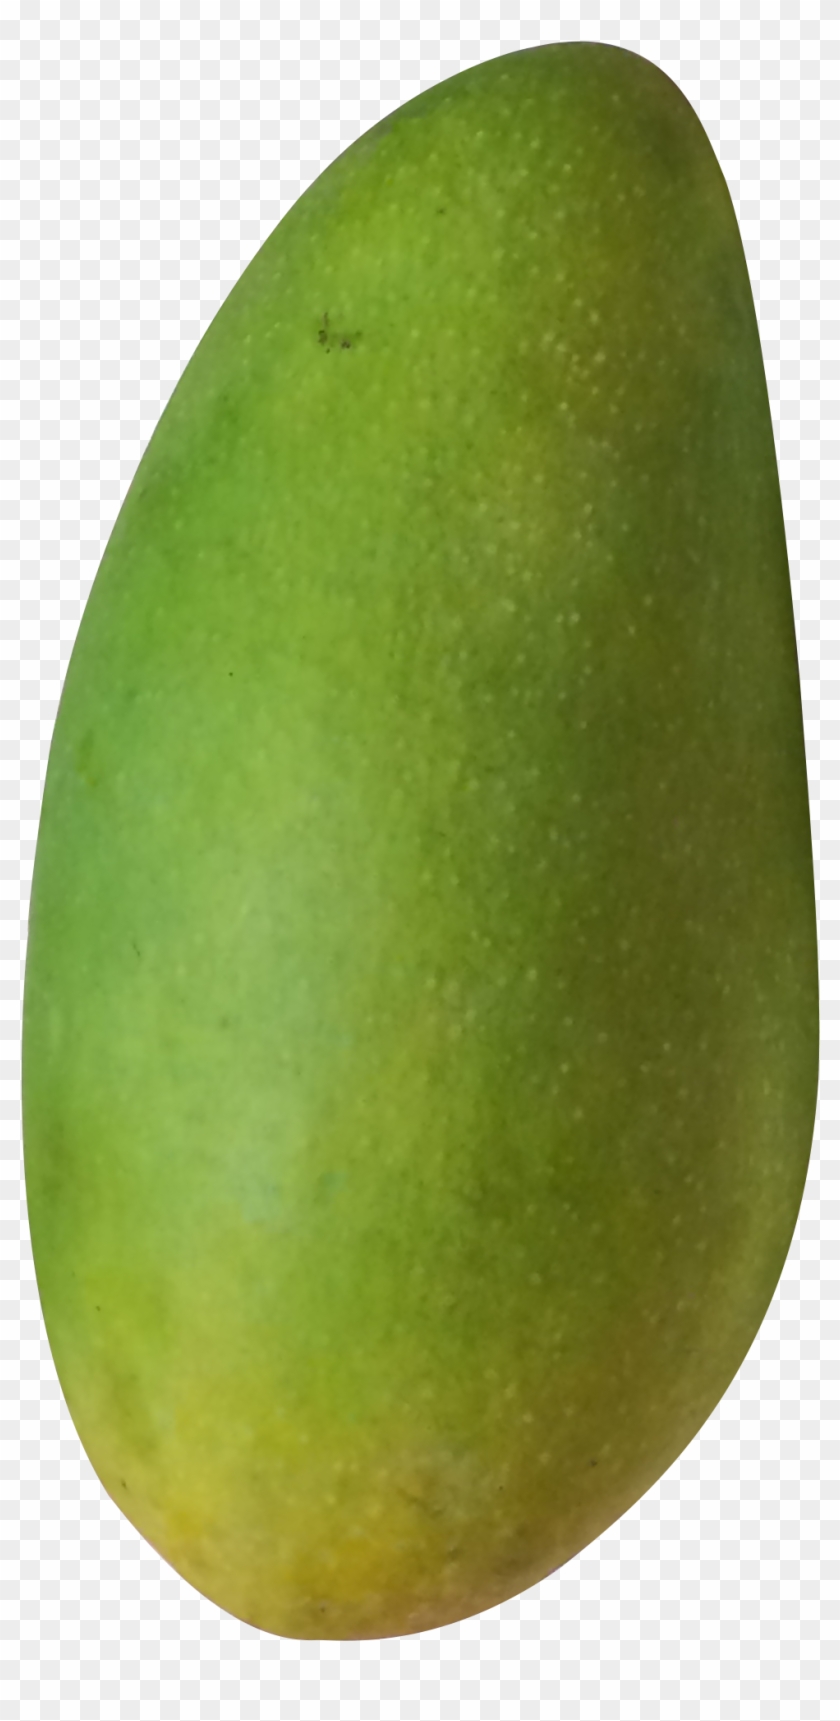 Mango Avocado - A Mango - Mango #1249650